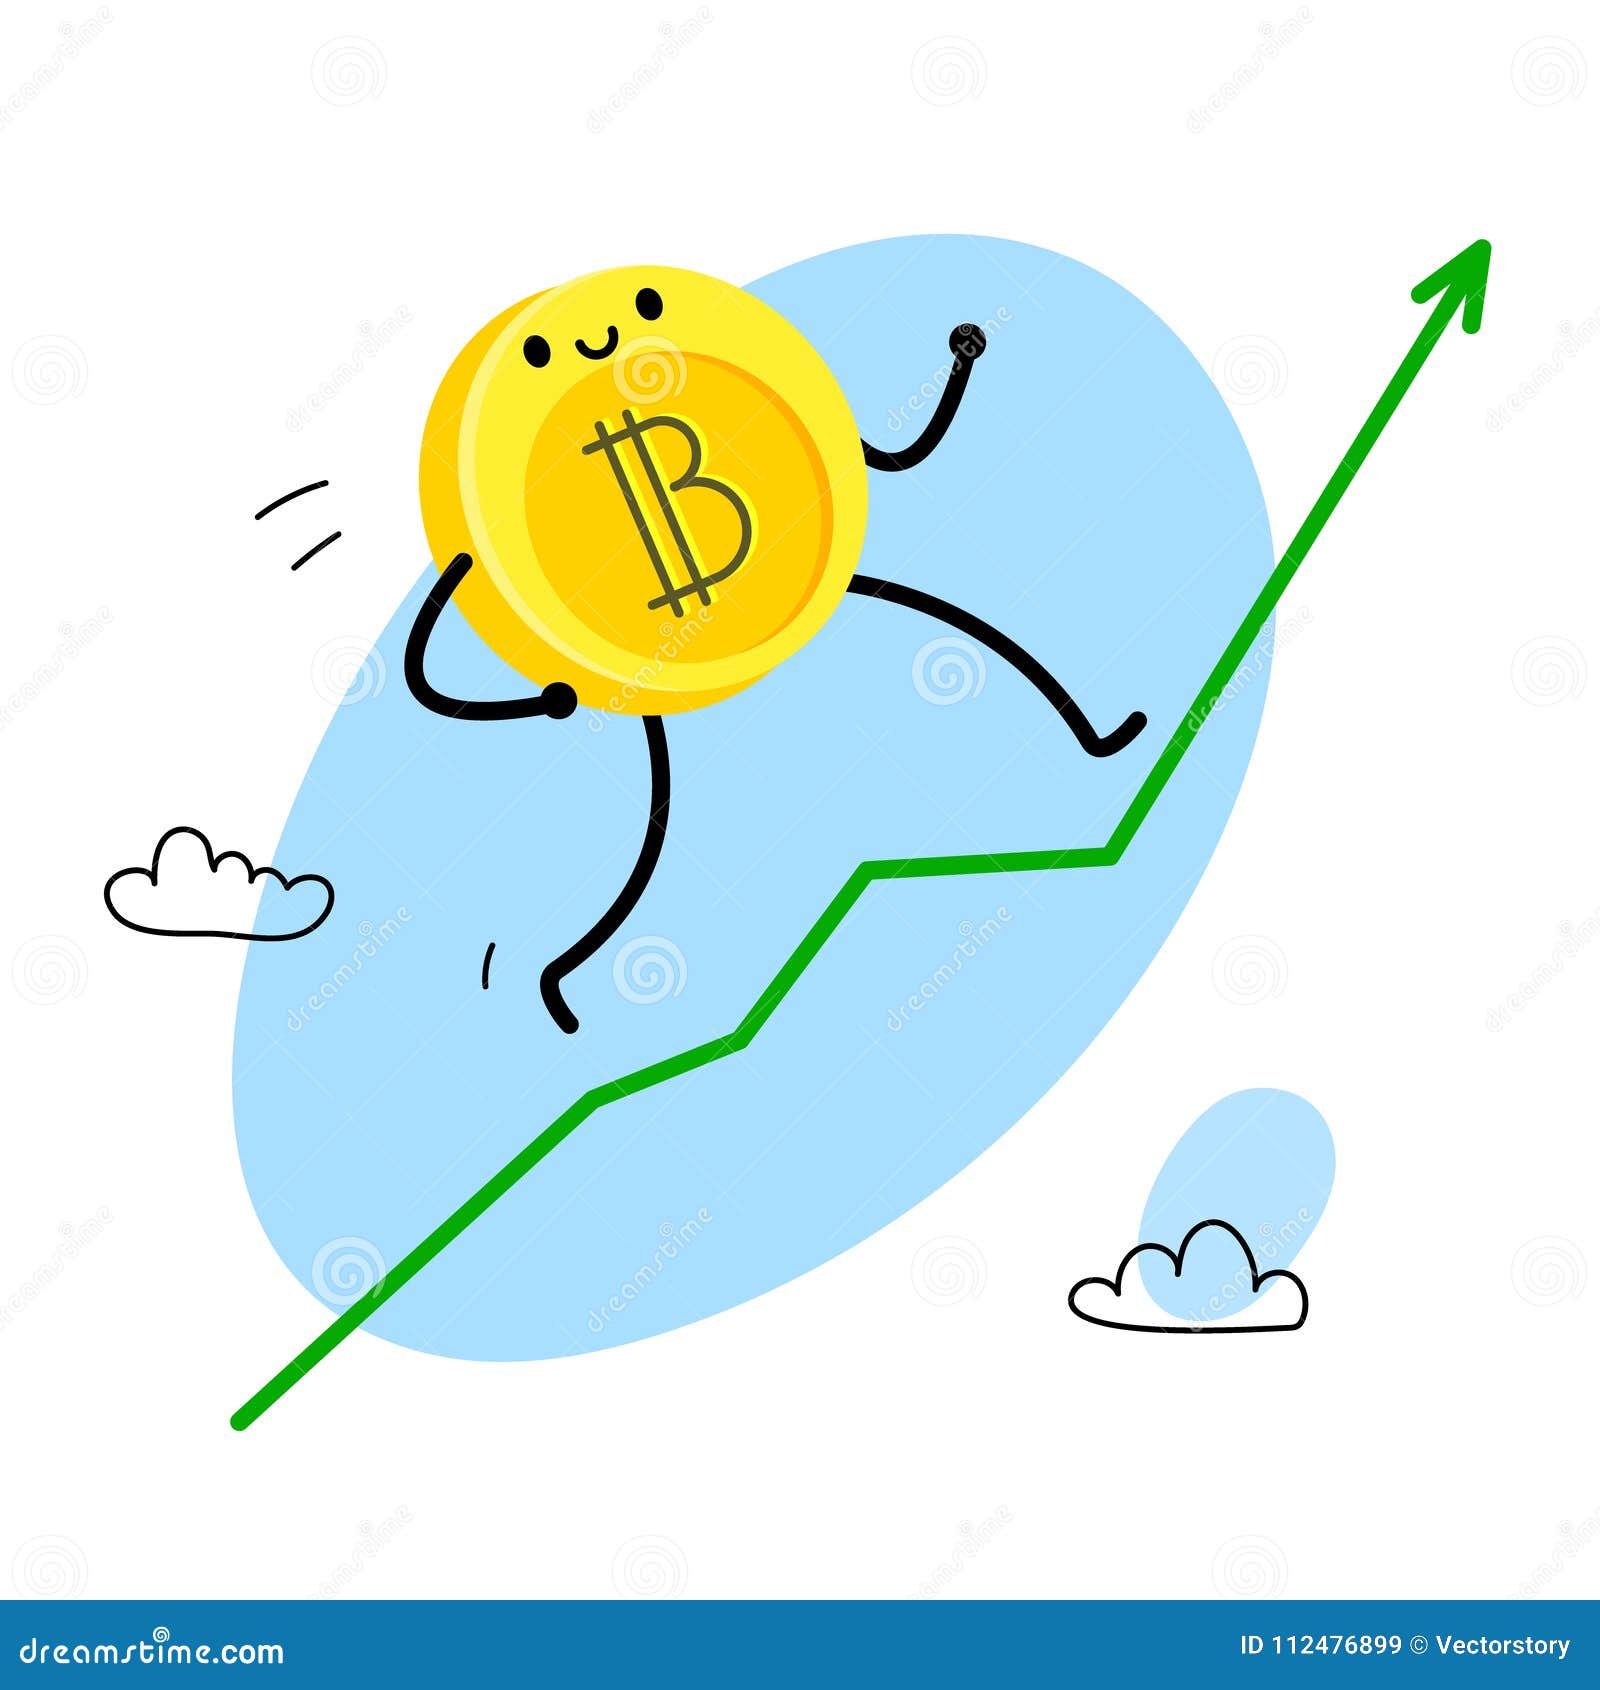 Cartoon bitcoin character. stock vector. Illustration of digital